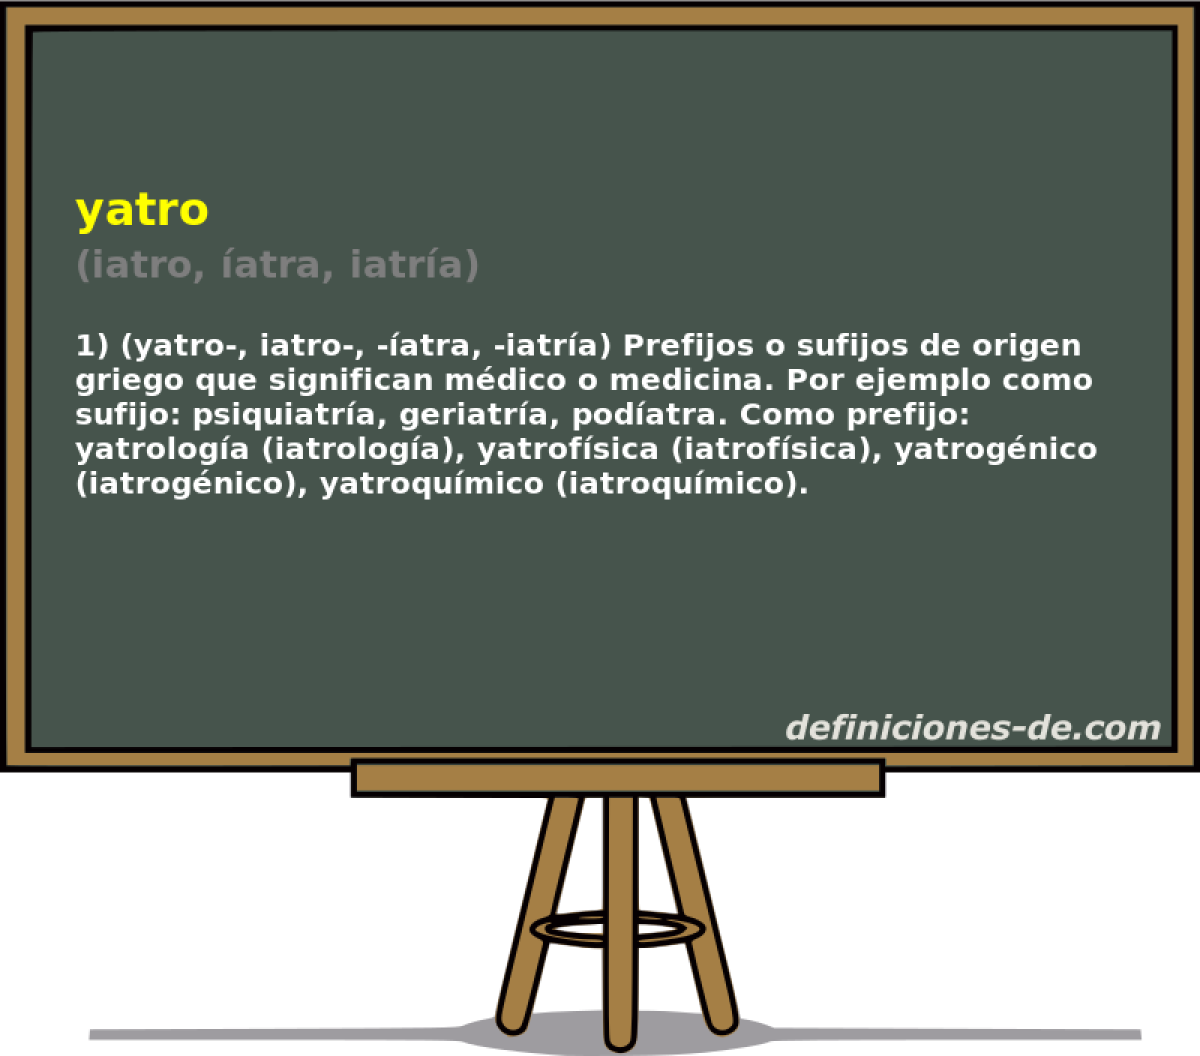 yatro (iatro, atra, iatra)